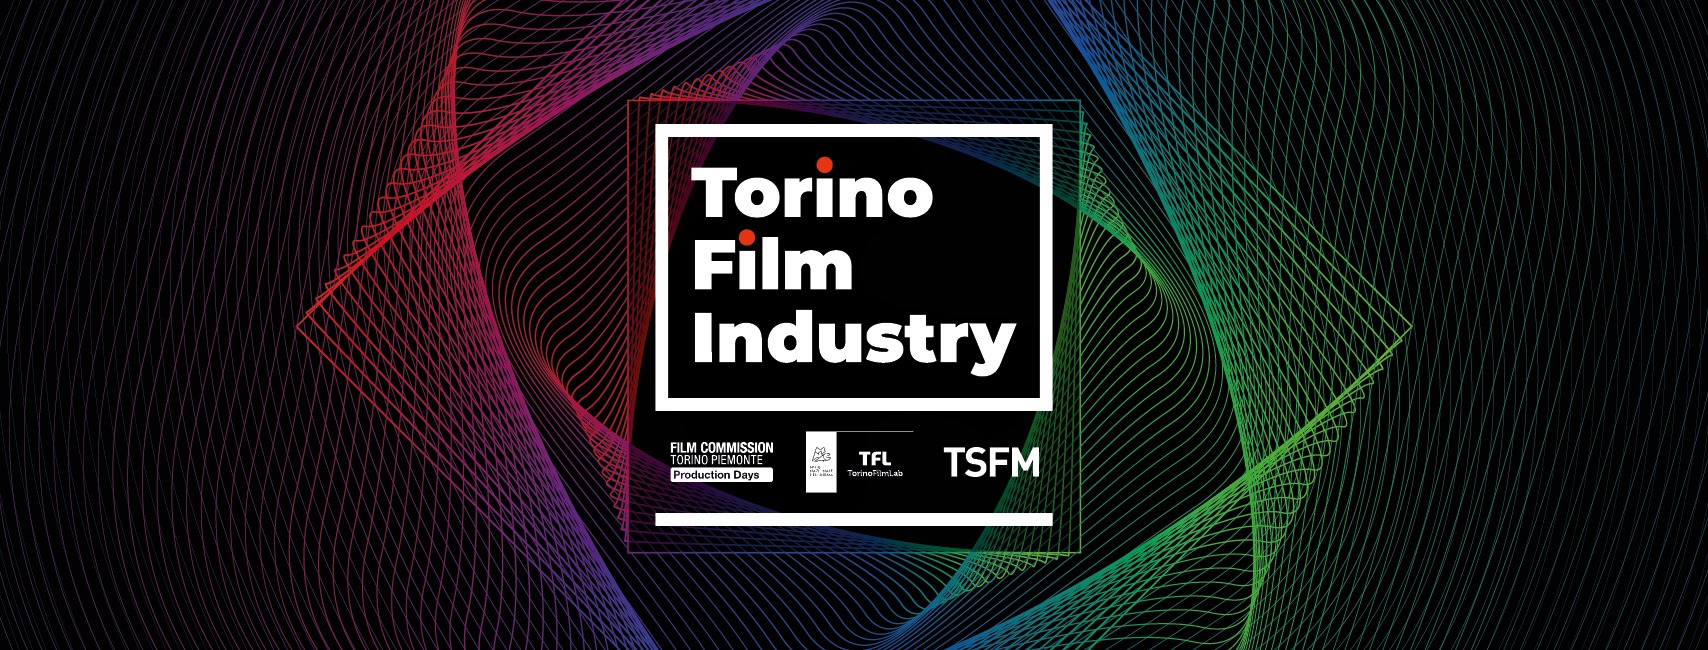 TFI - Torino Film Industry 2021 - Torino Film Fest